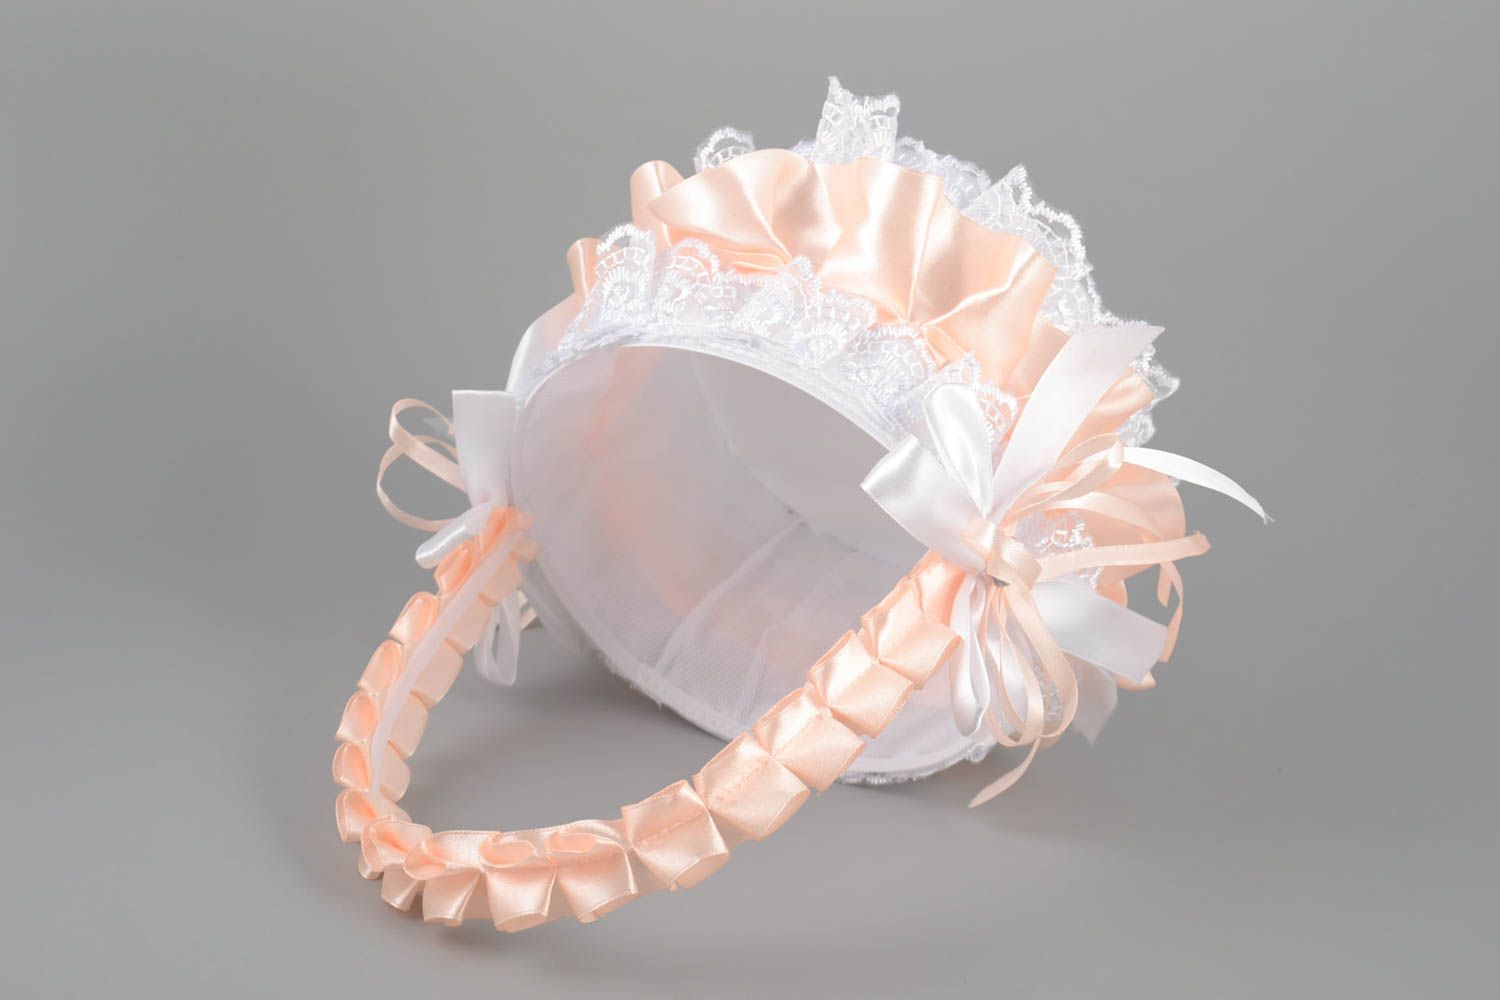 Handmade designer decorative lacy wedding basket for money and flower petals photo 4